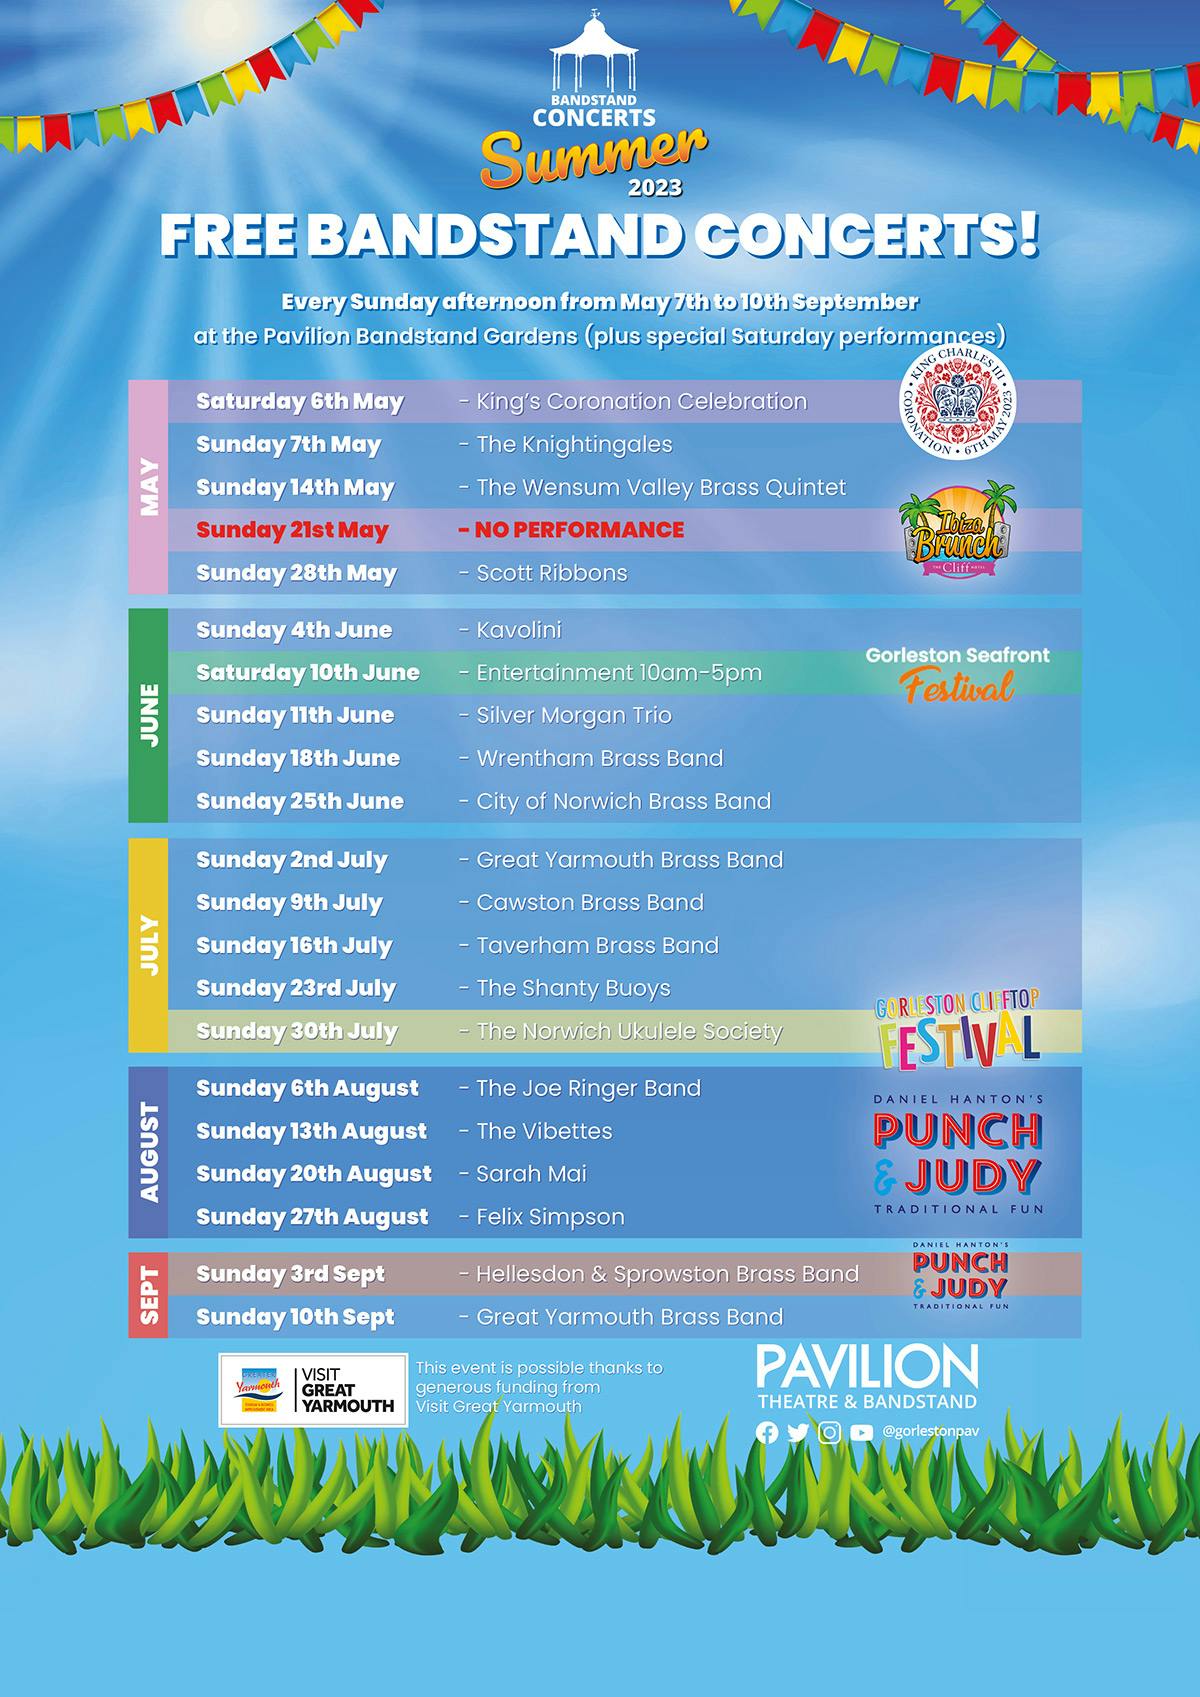 Summer Bandstand Concerts 2023 schedule